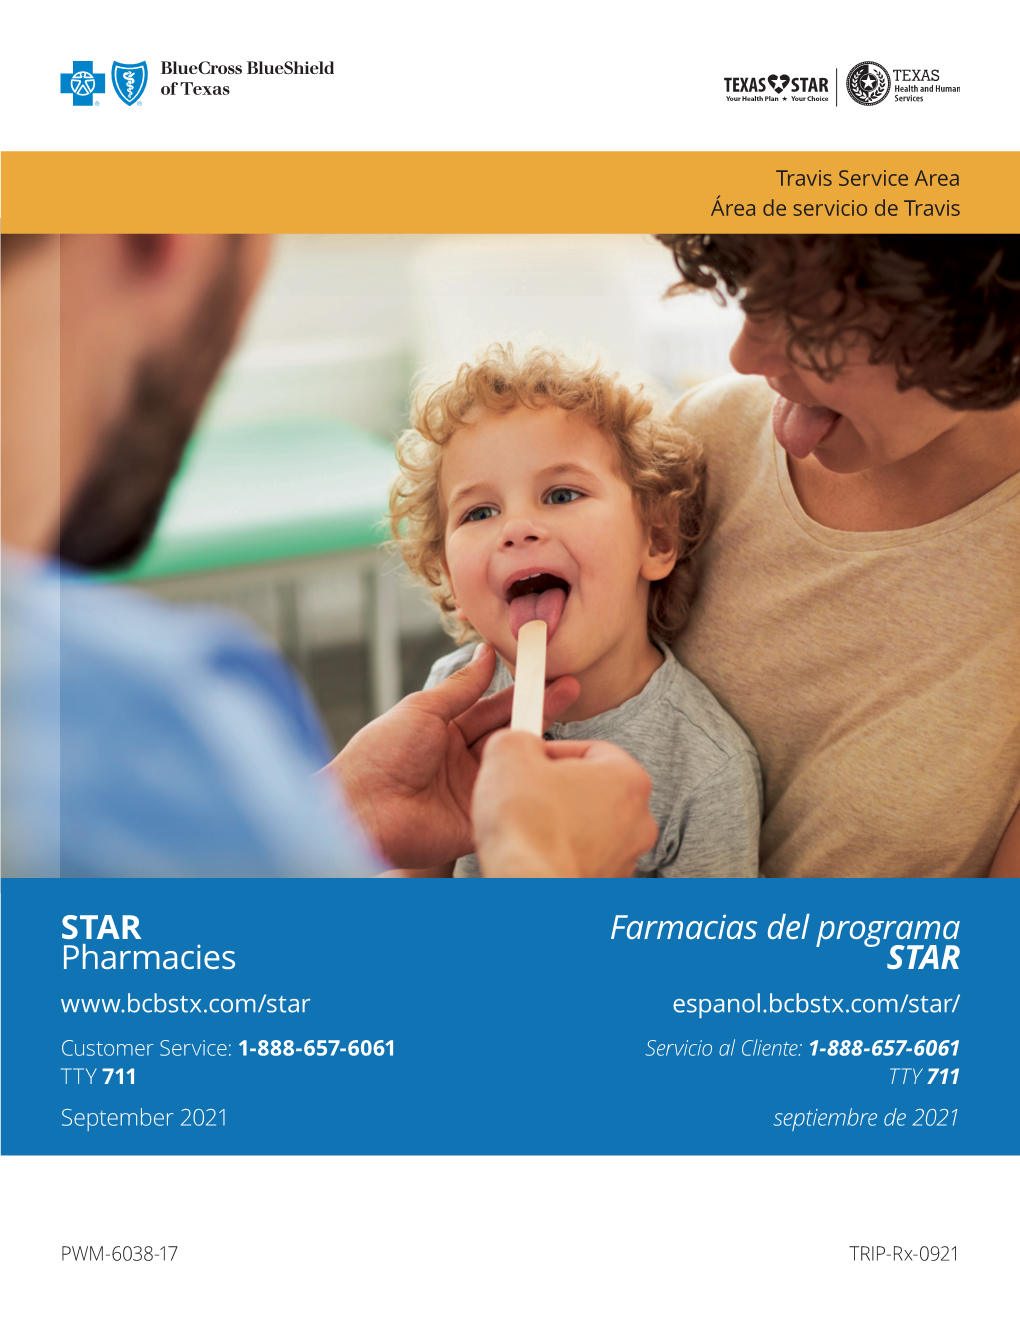 STAR Pharmacies Farmacias Del Programa STAR